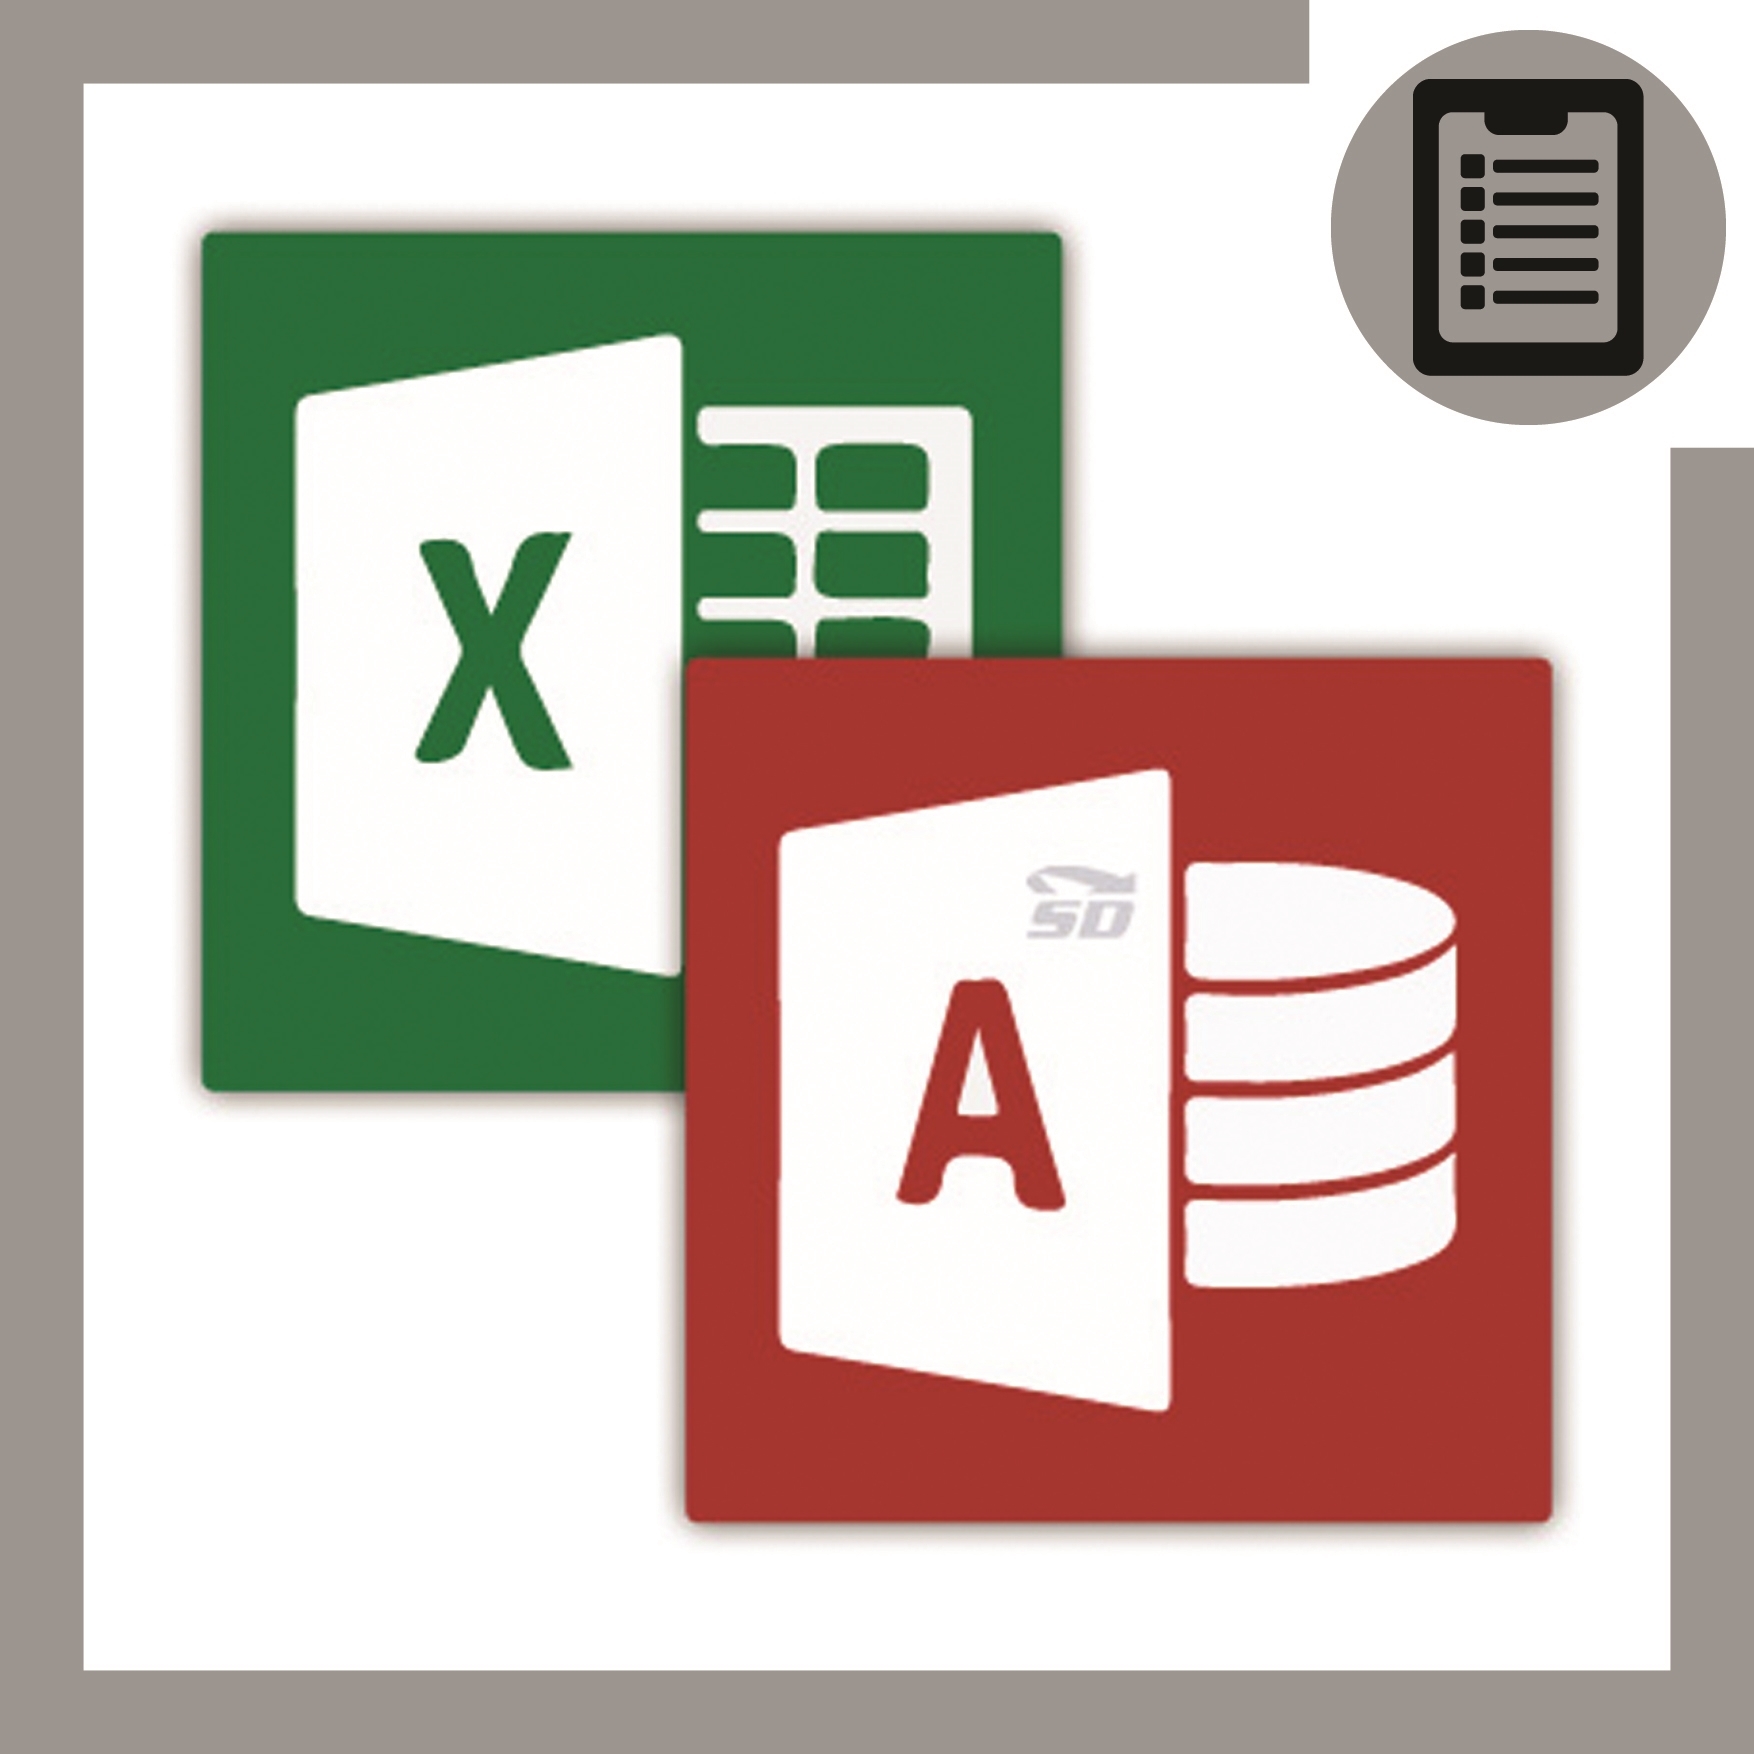 اکسل و اکسس کاربردی Excel & Access (عمران)